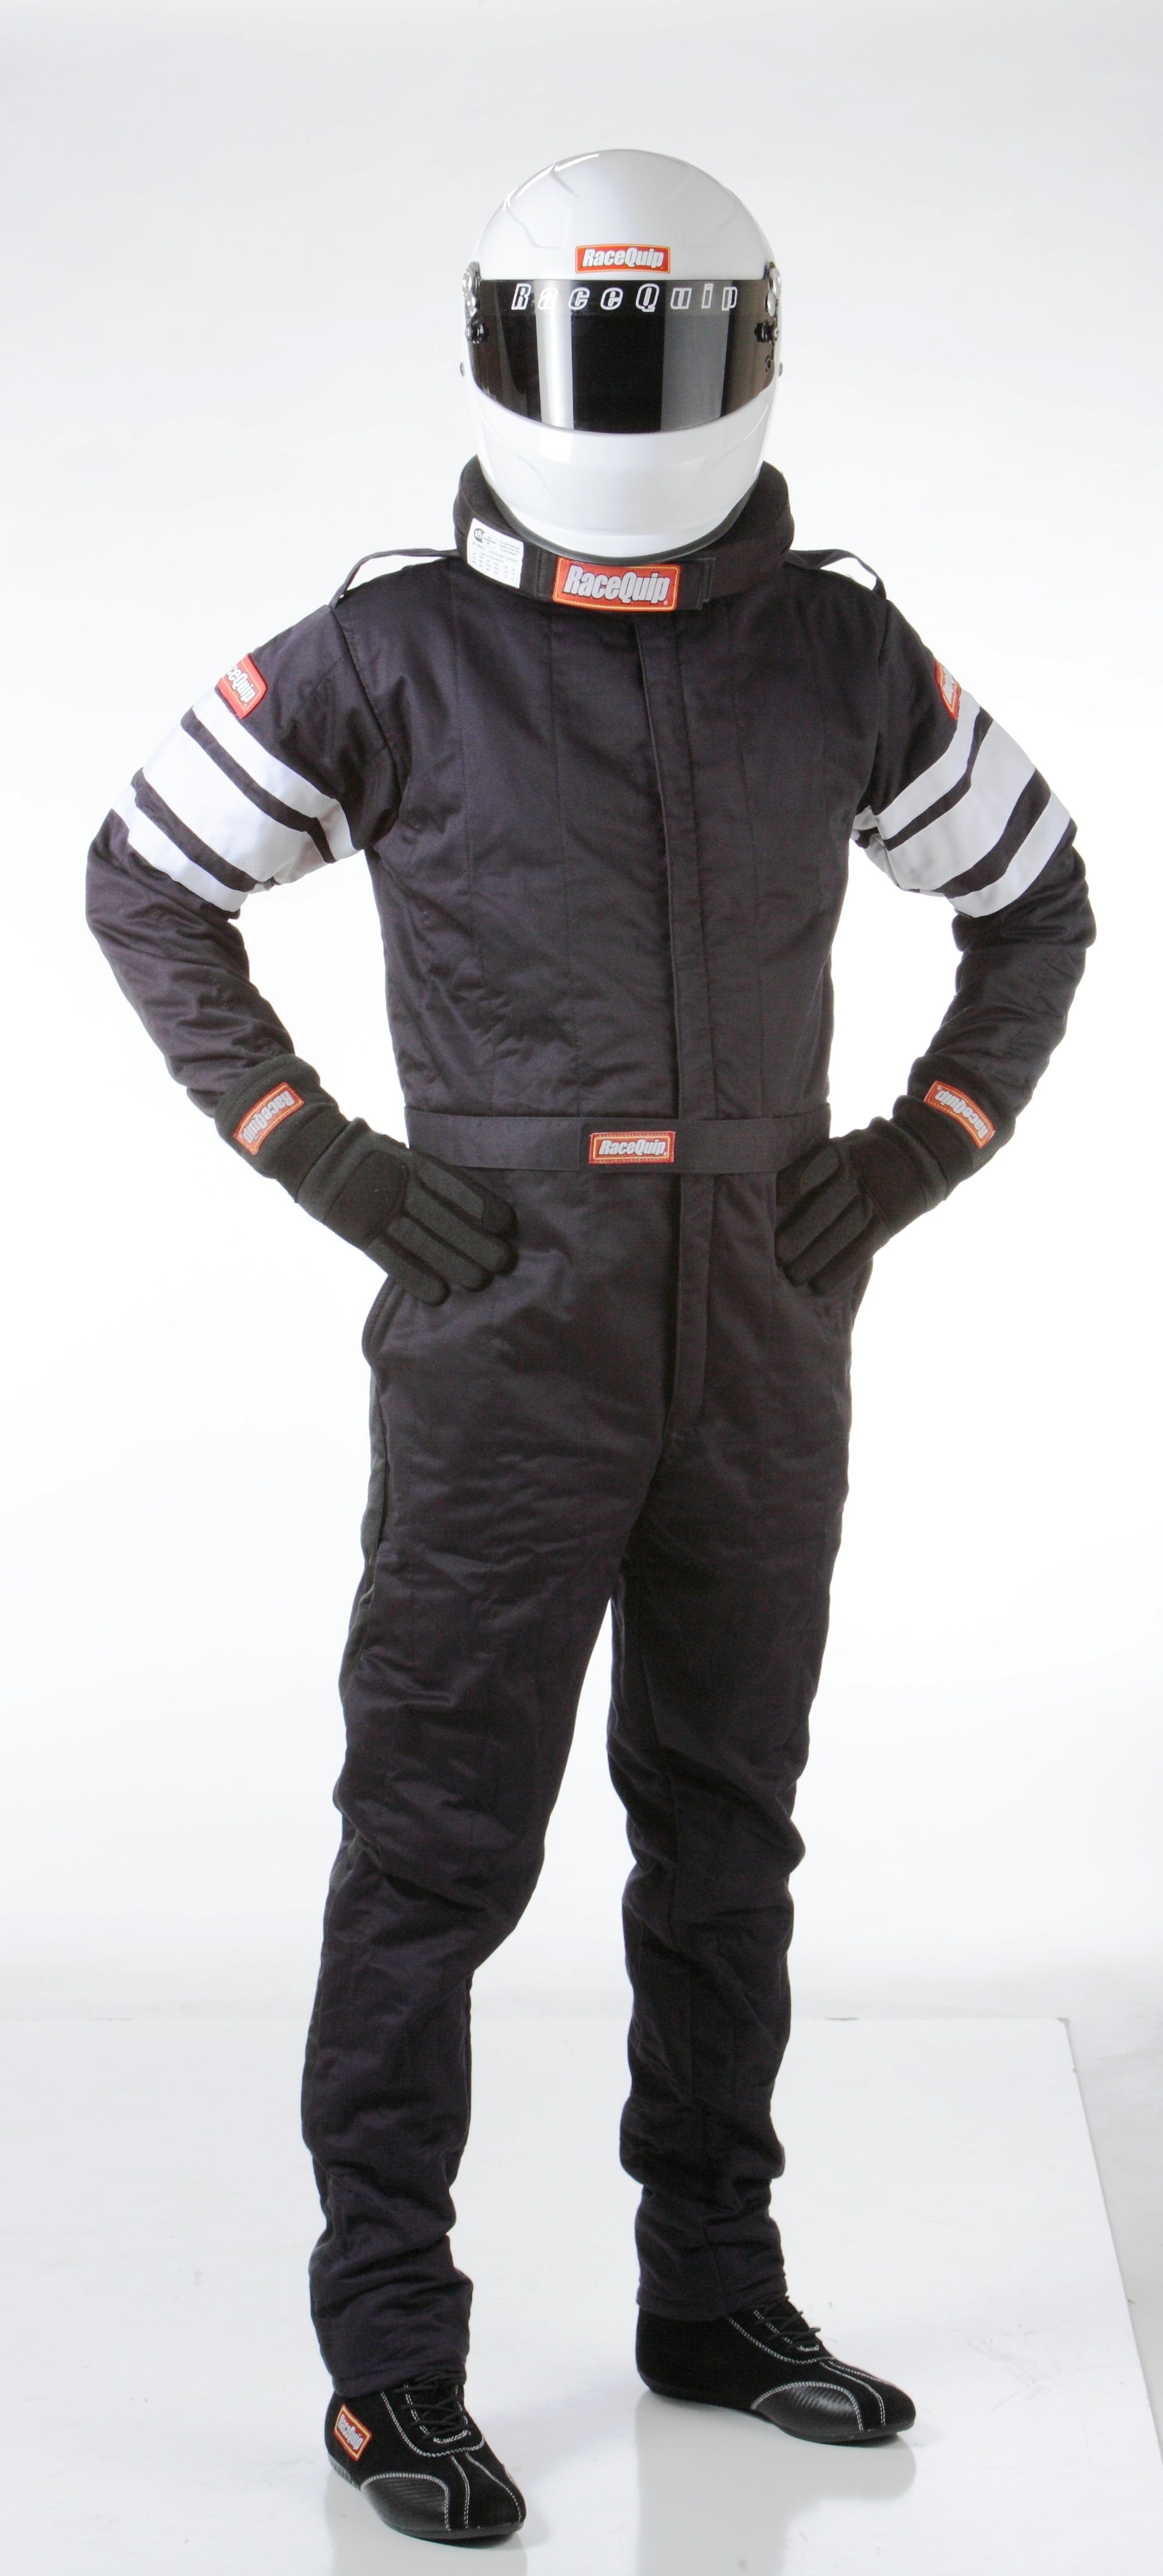 RaceQuip 120003 SFI-5 Pyrovatex One-Piece Multi-Layer Racing Fire Suit (Black, Medium)